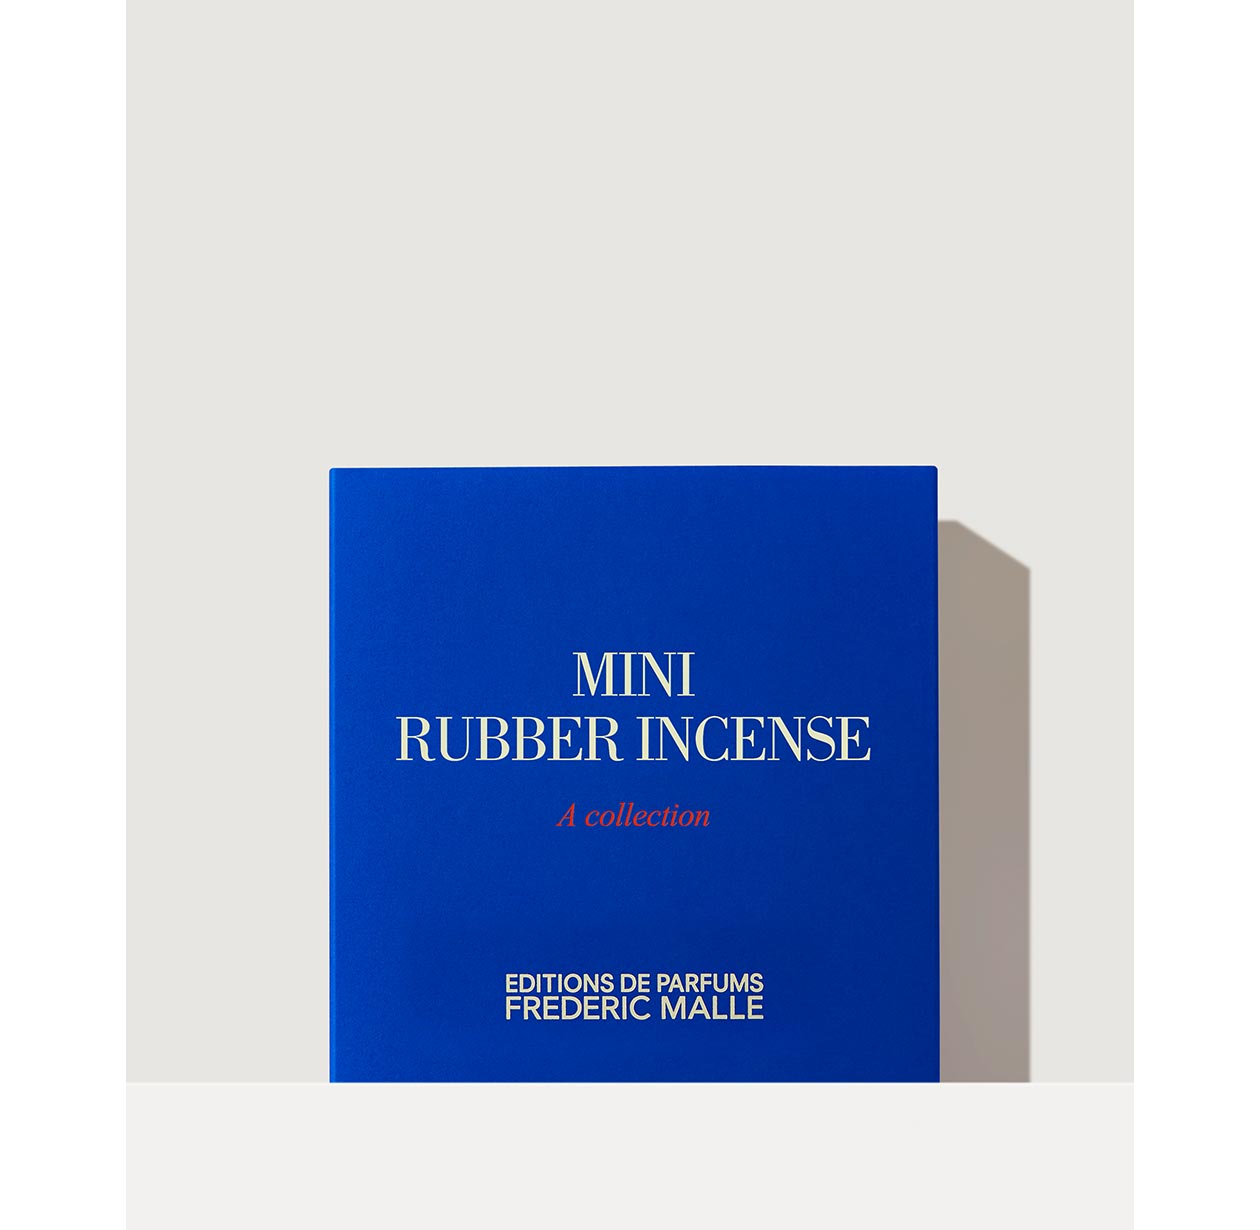 MINI RUBBER INCENSE - A COLLECTION